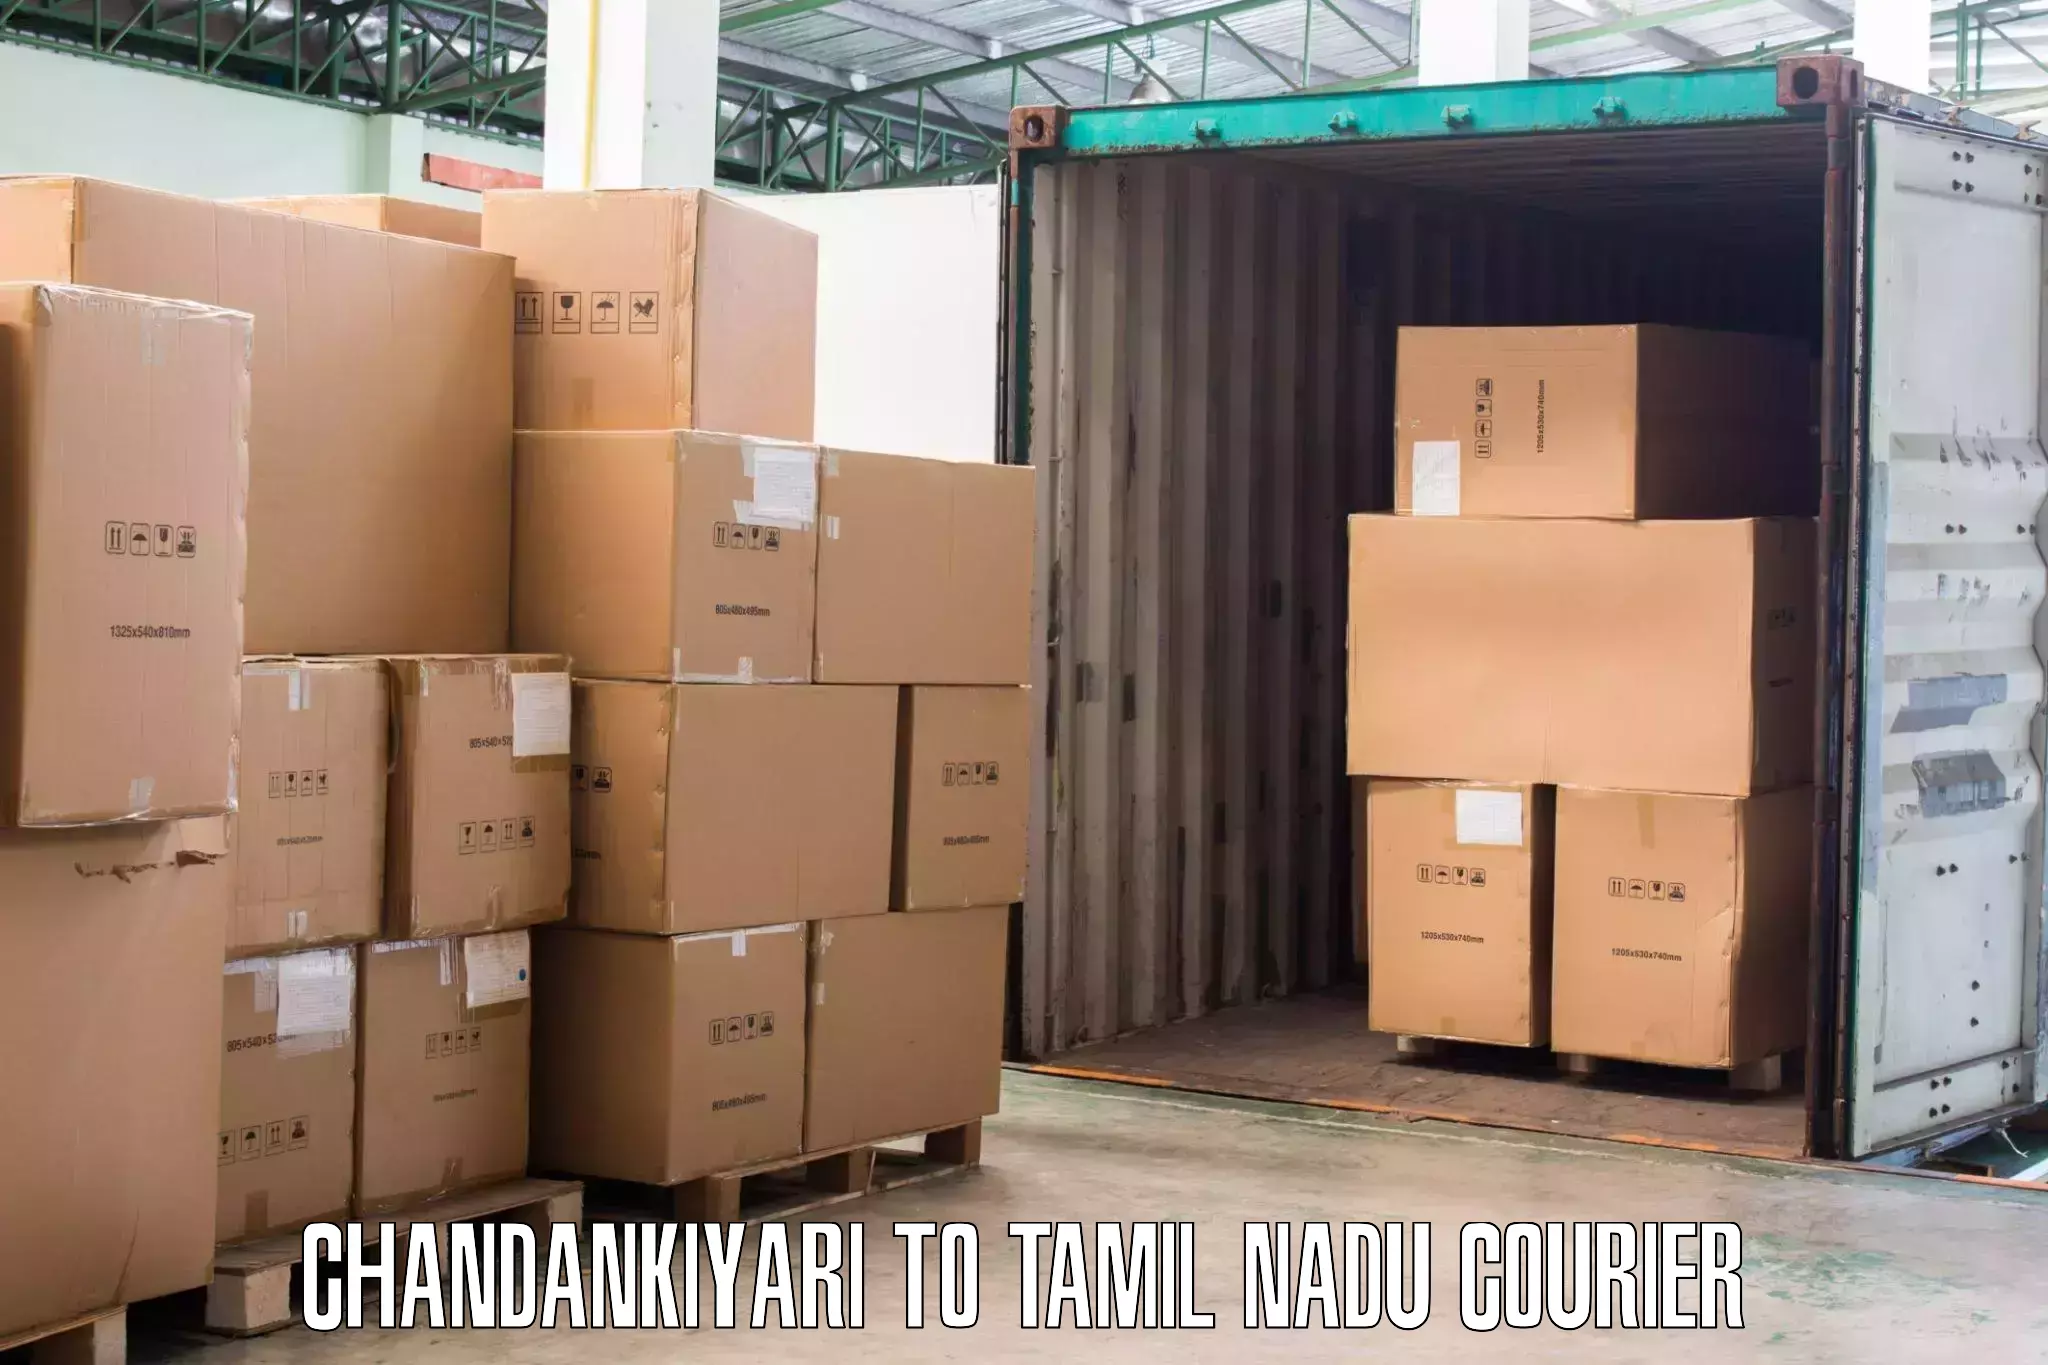 Furniture delivery service Chandankiyari to Ambattur